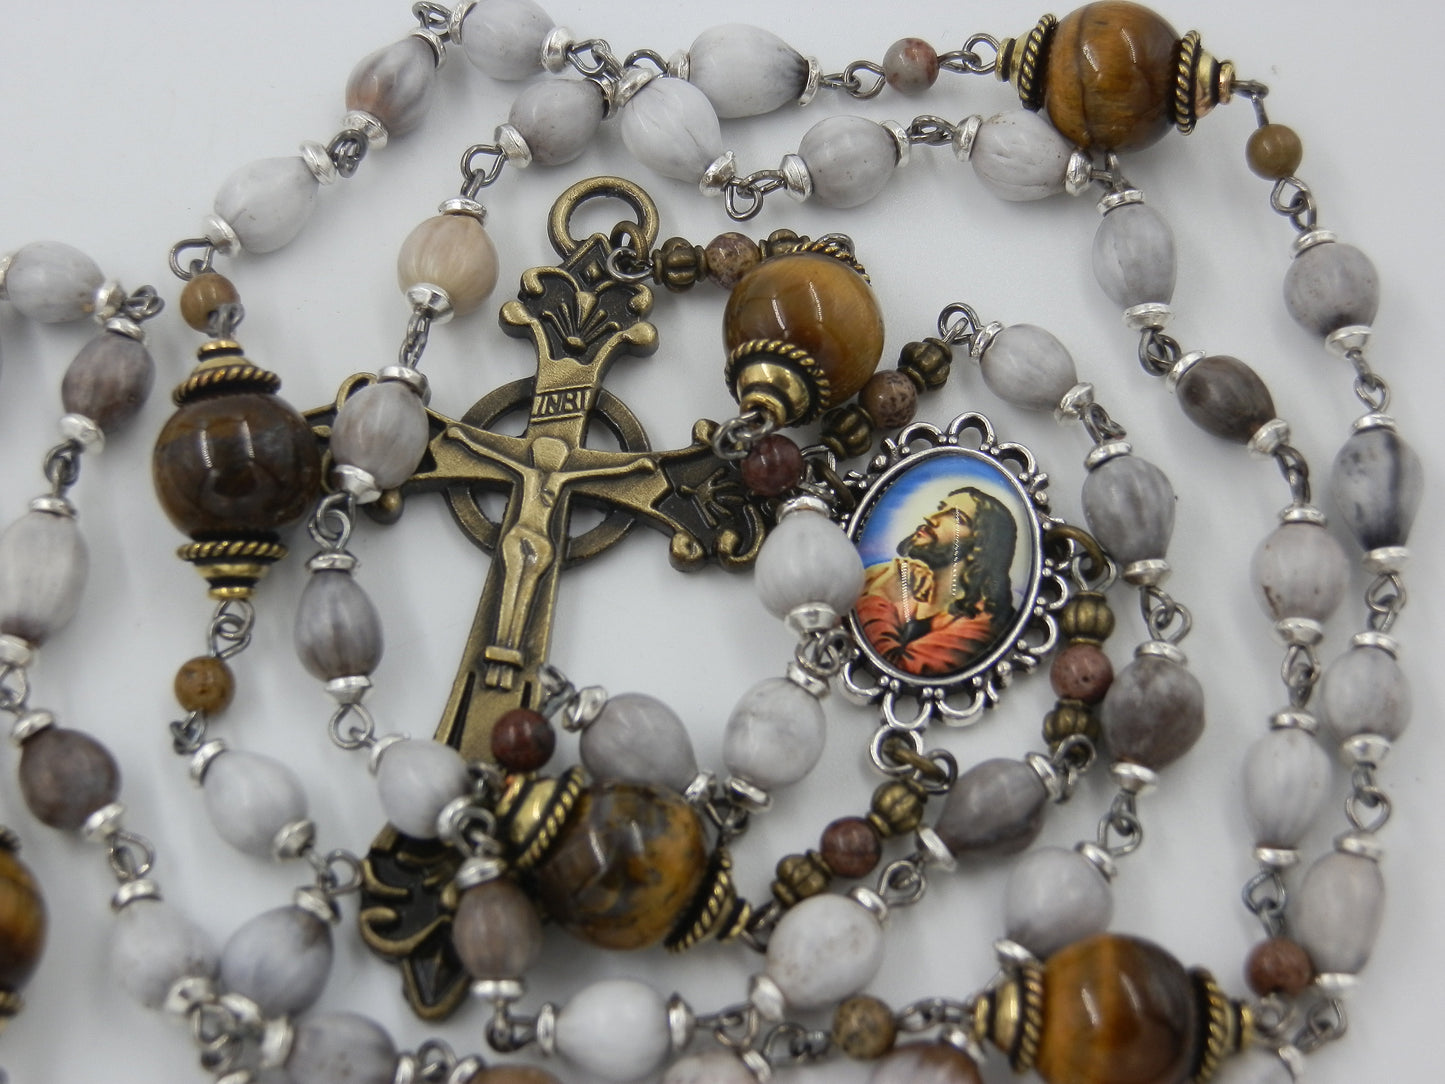 The Agony in the Garden Rosary beads, Job's tear's Rosary beads, Rosaries, Gemstone Rosaries, Brass Crucifix, Patron Saint Prayer beads,